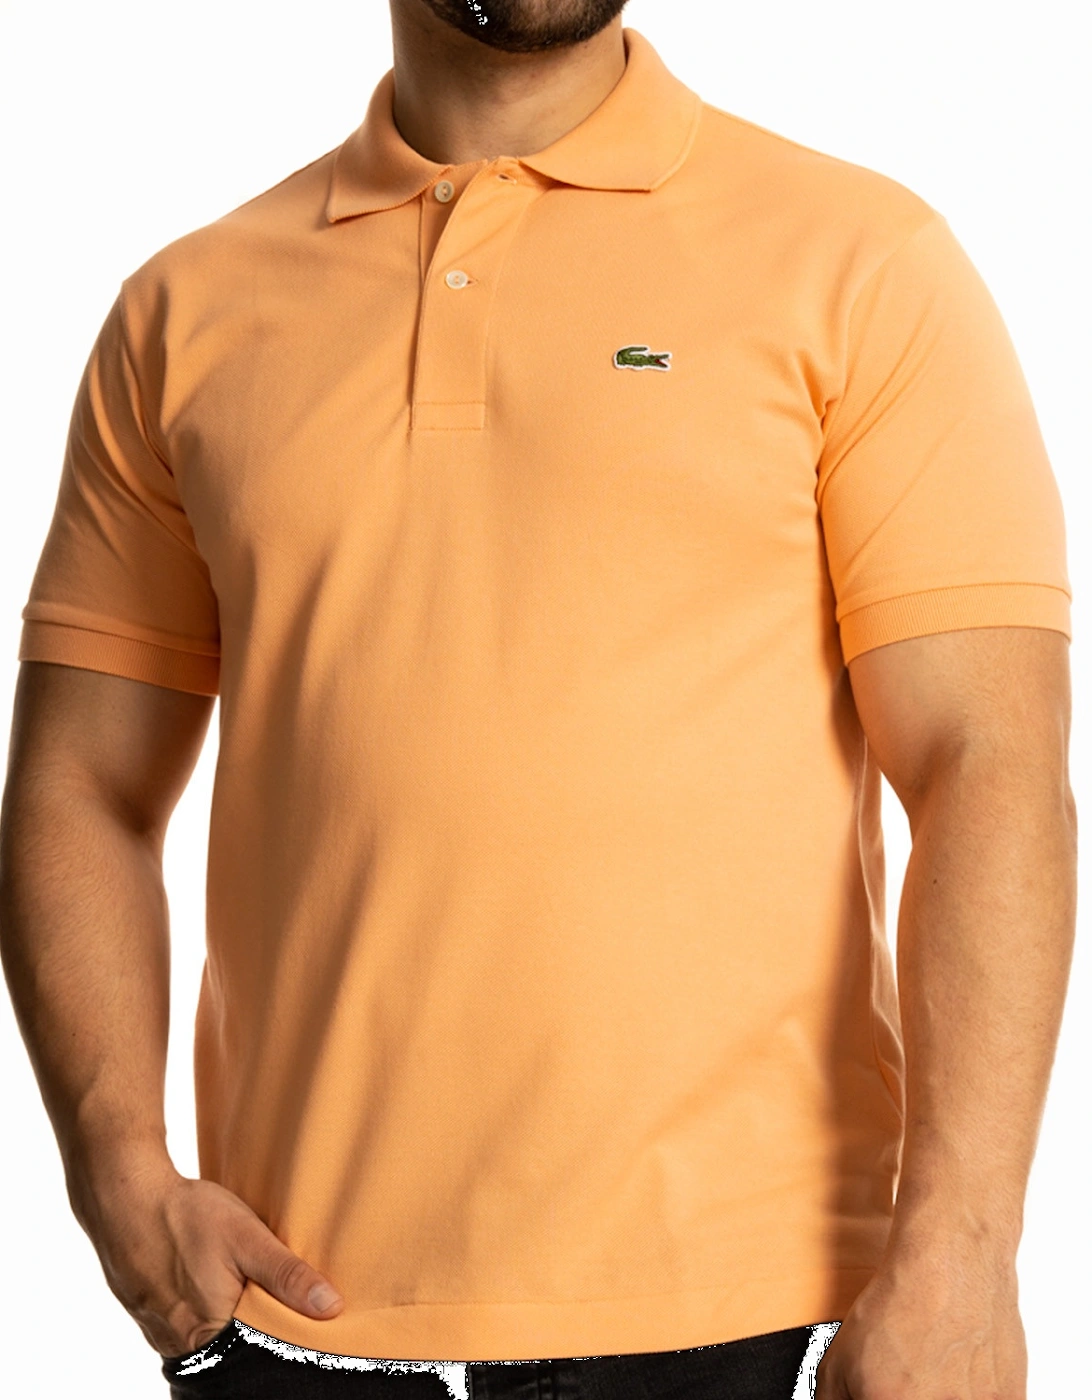 Mens S/S Polo Shirt (Orange)